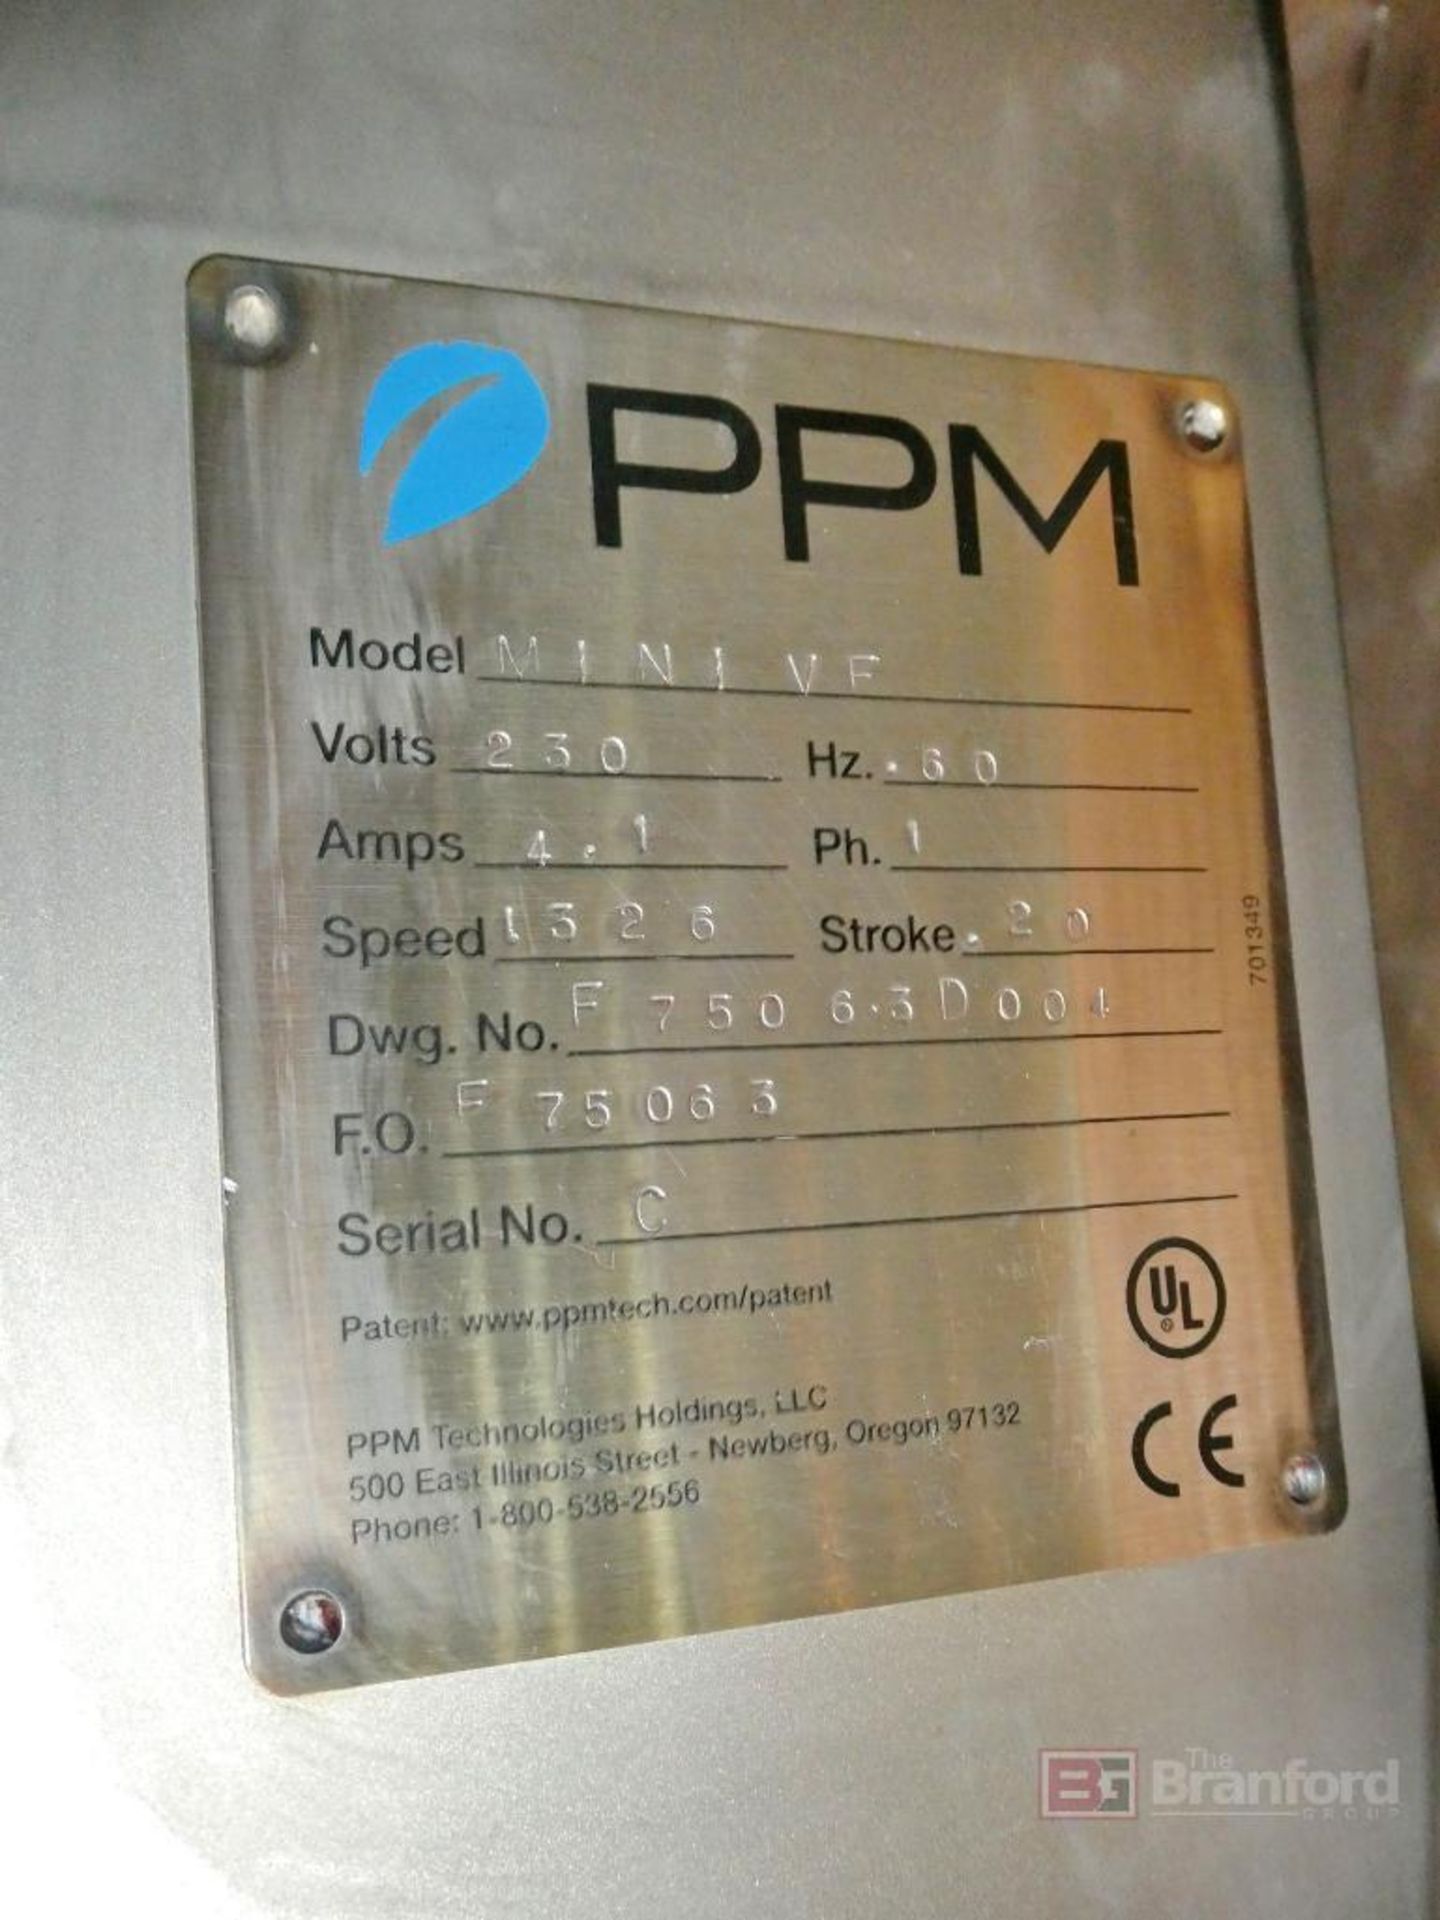 PPM Model MINI VF, Vibrator Conveyor - Image 2 of 3